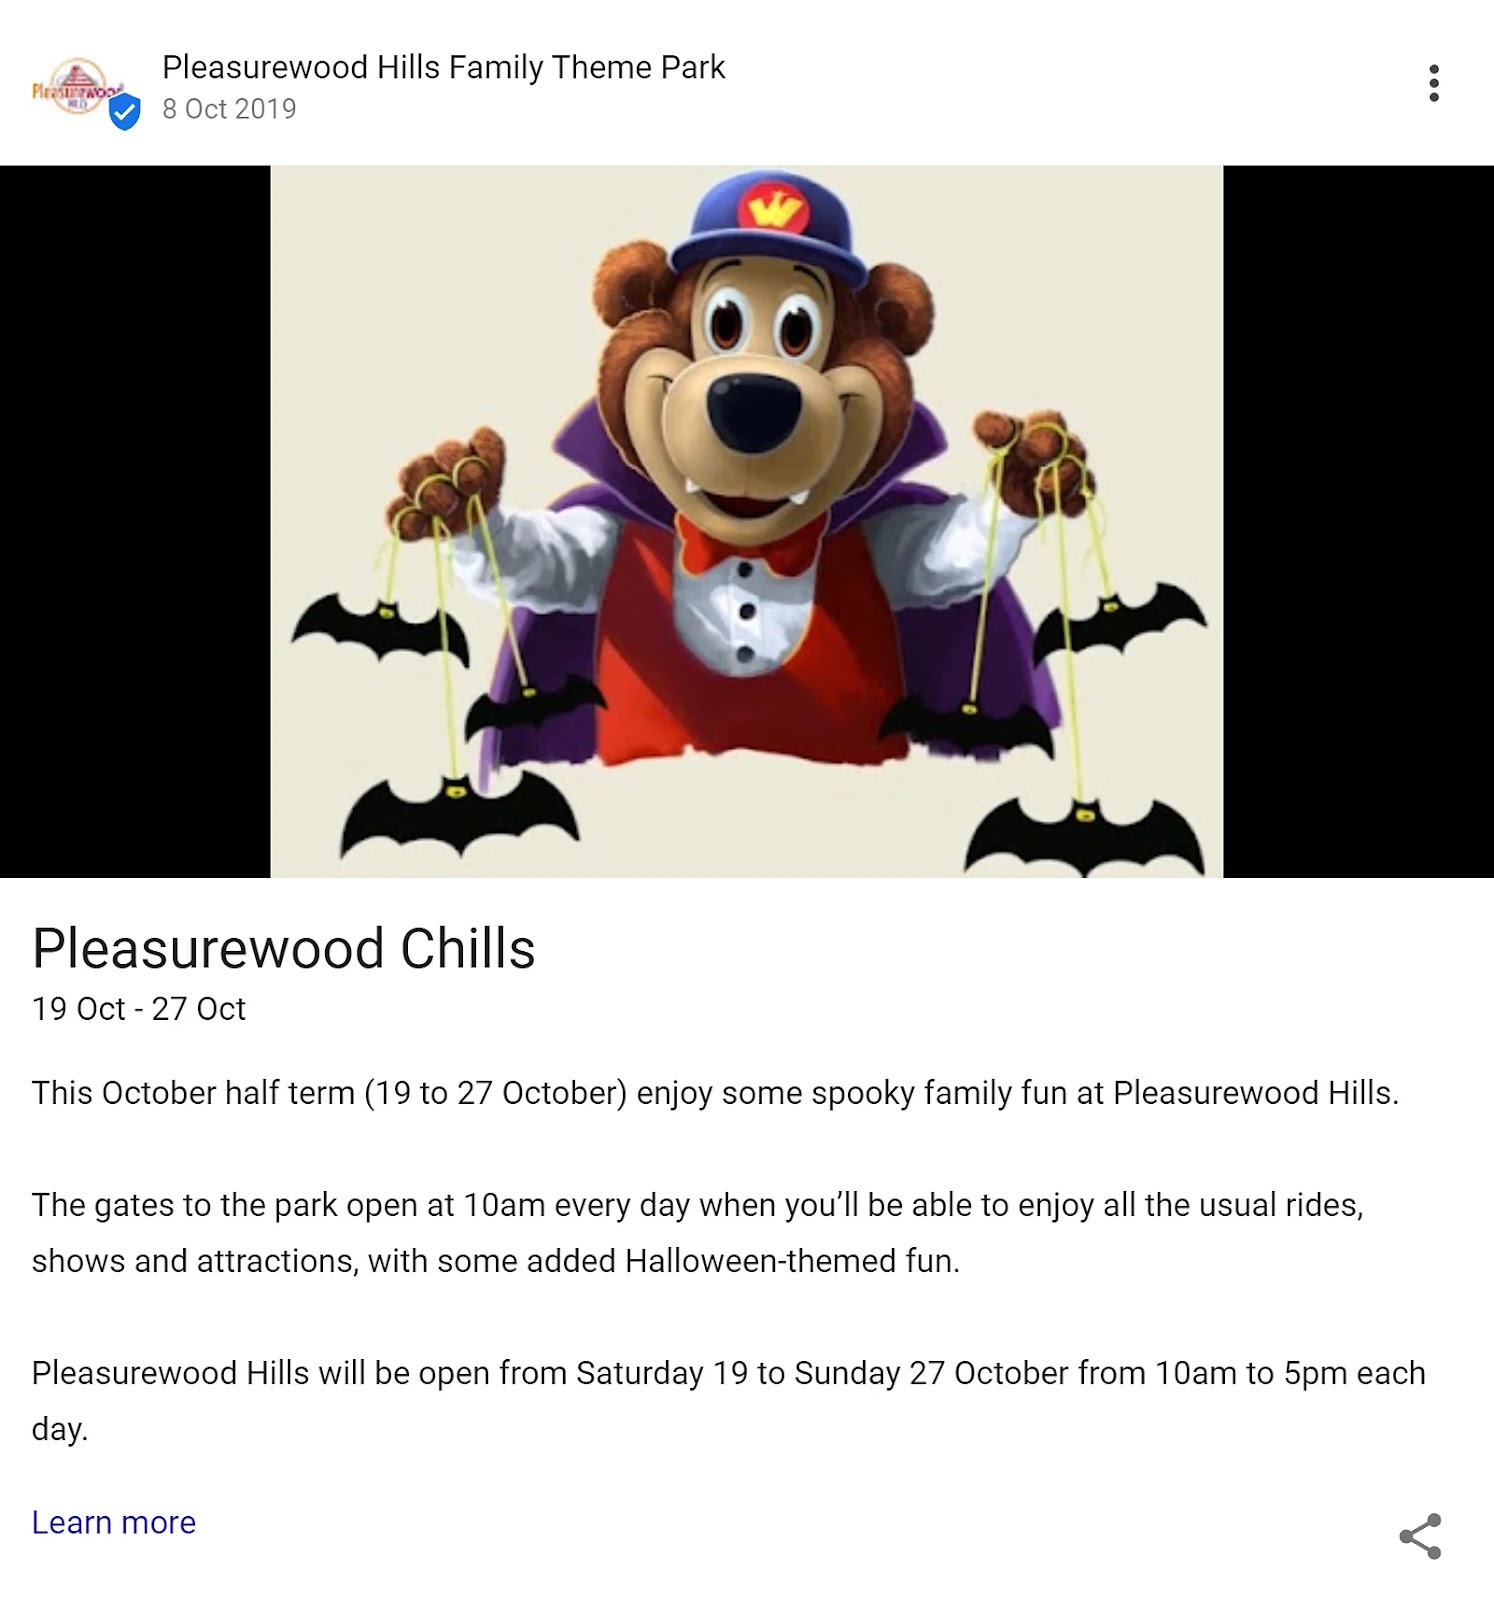 Pleasurewood Hills Family Theme Park's Google Business Profile event post